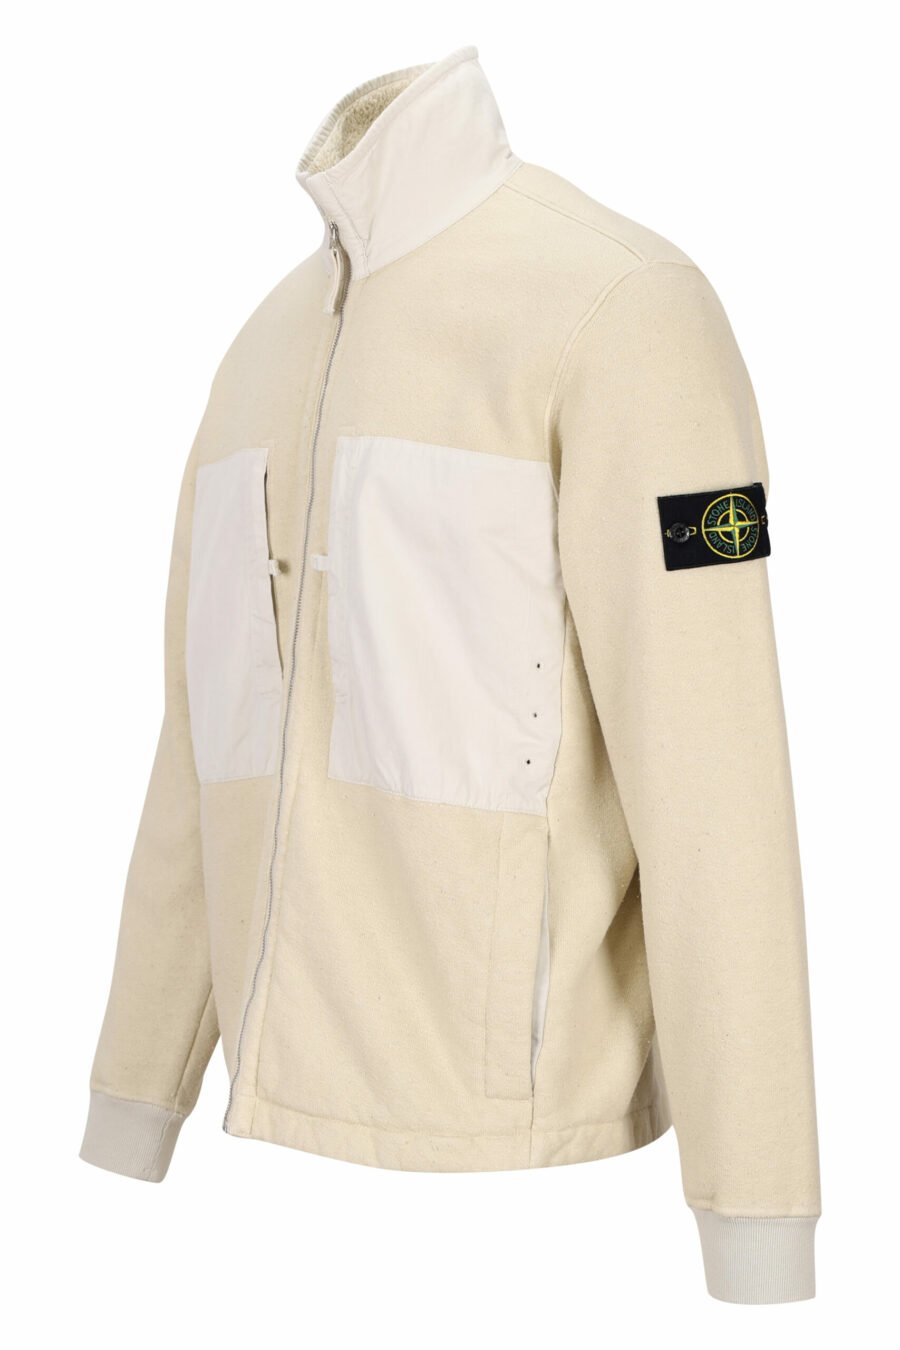 Beige mix sweatshirt with zip and fleece collar - 8052572757938 1 scaled